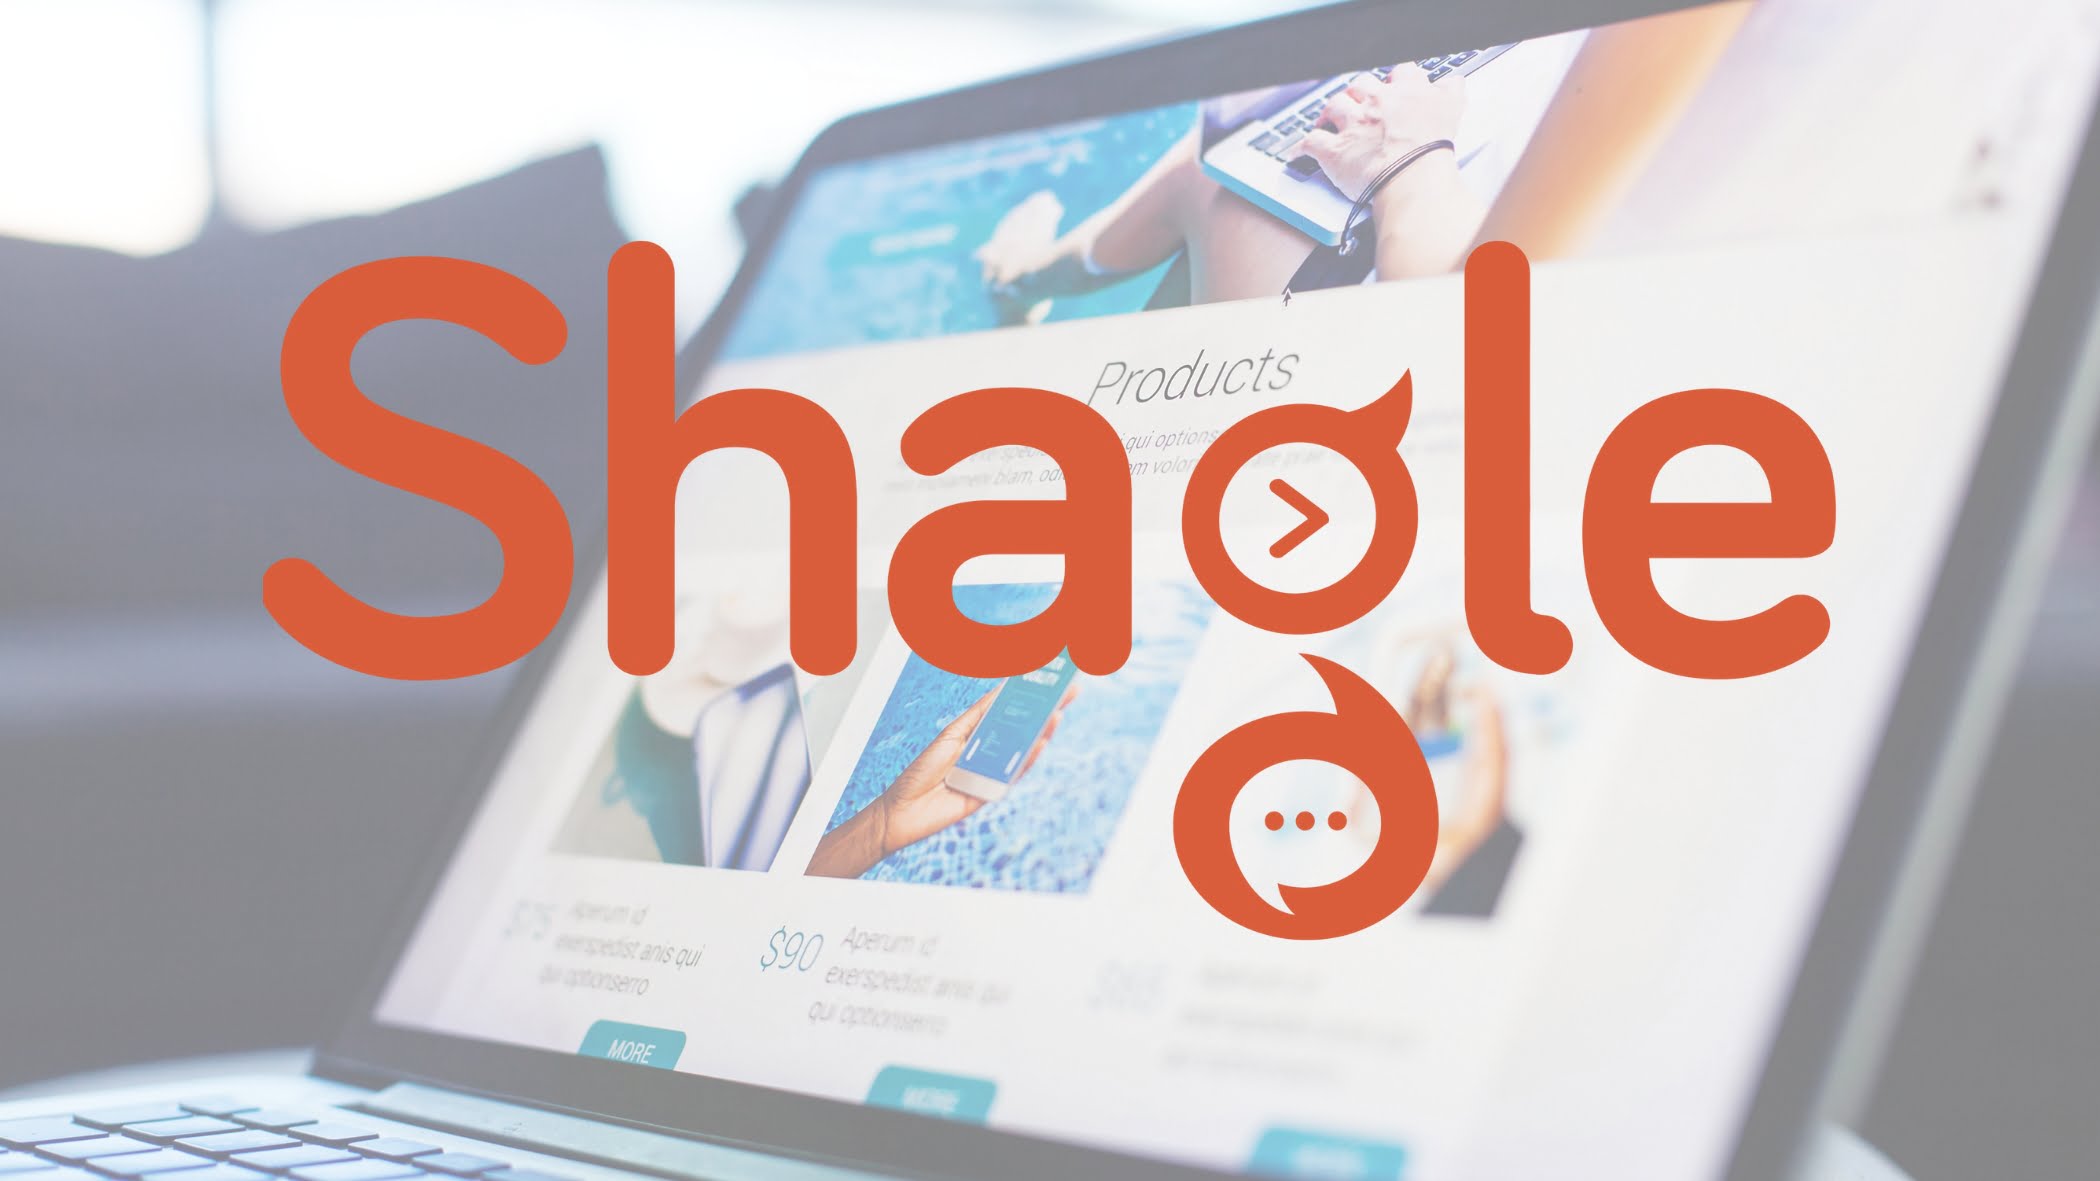 shagle-site-falso-app-telegram-app-falso-android-backdoor-espionagem